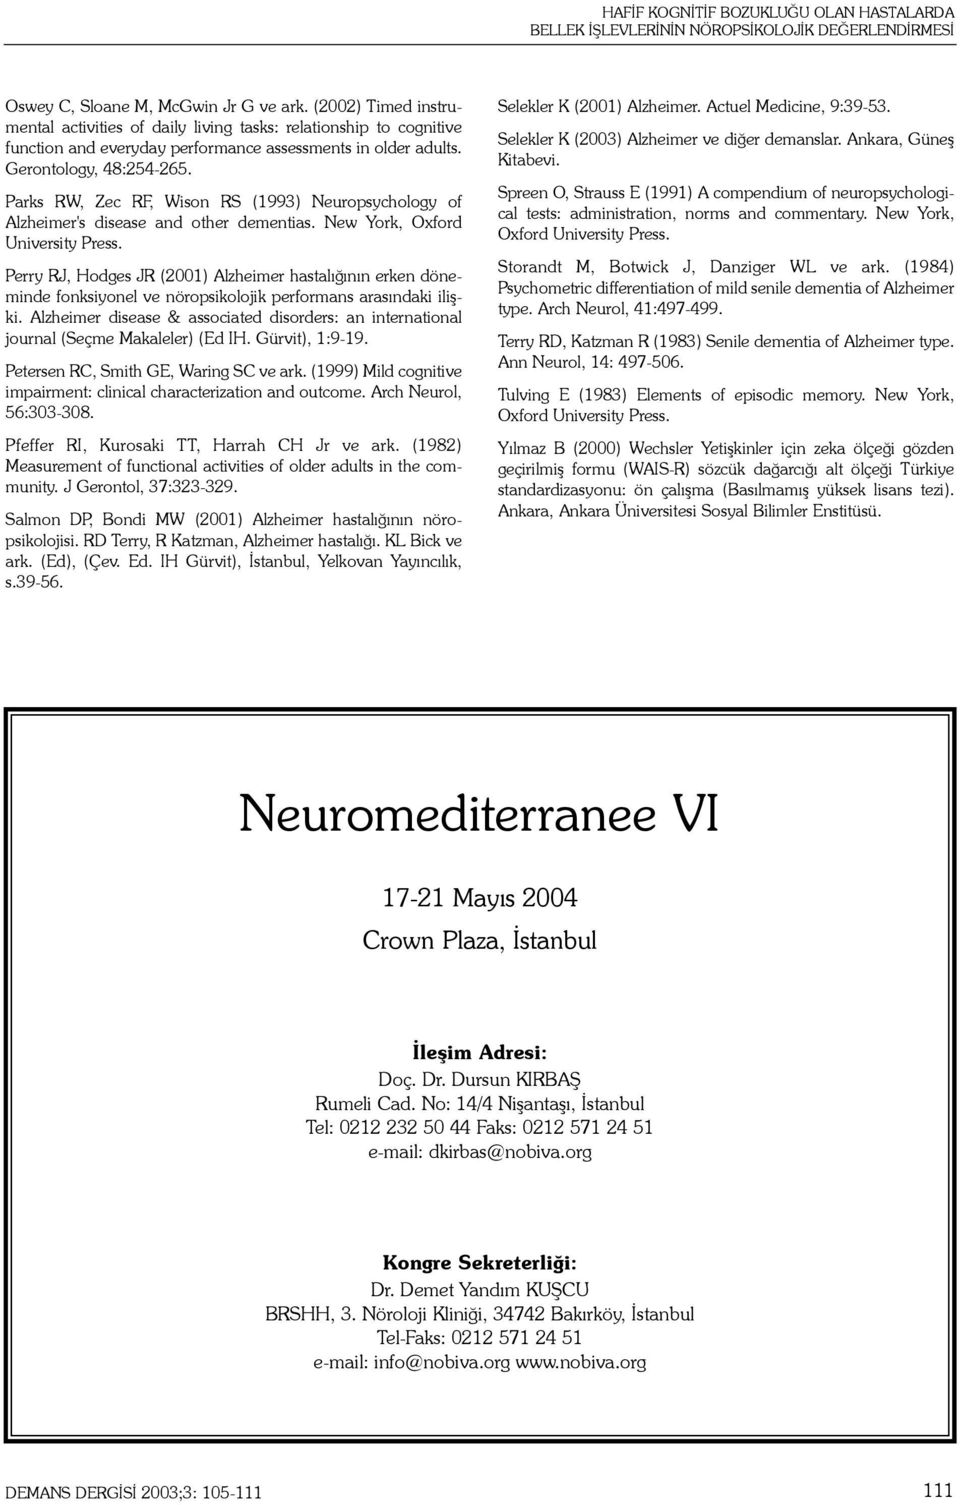 Parks RW, Zec RF, Wison RS (1993) Neuropsychology of Alzheimer's disease and other dementias. New York, Oxford University Press.